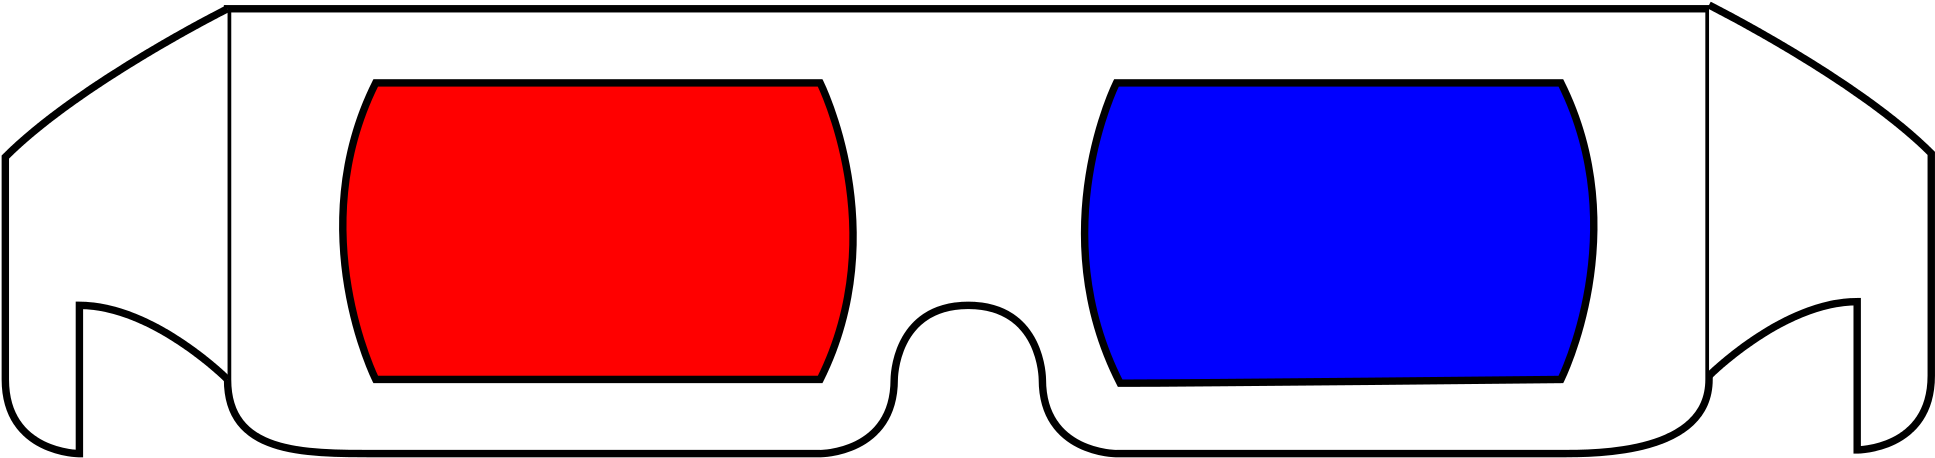 3d Glasses Red Blue - 3d Glasses Red Blue (2000x519)